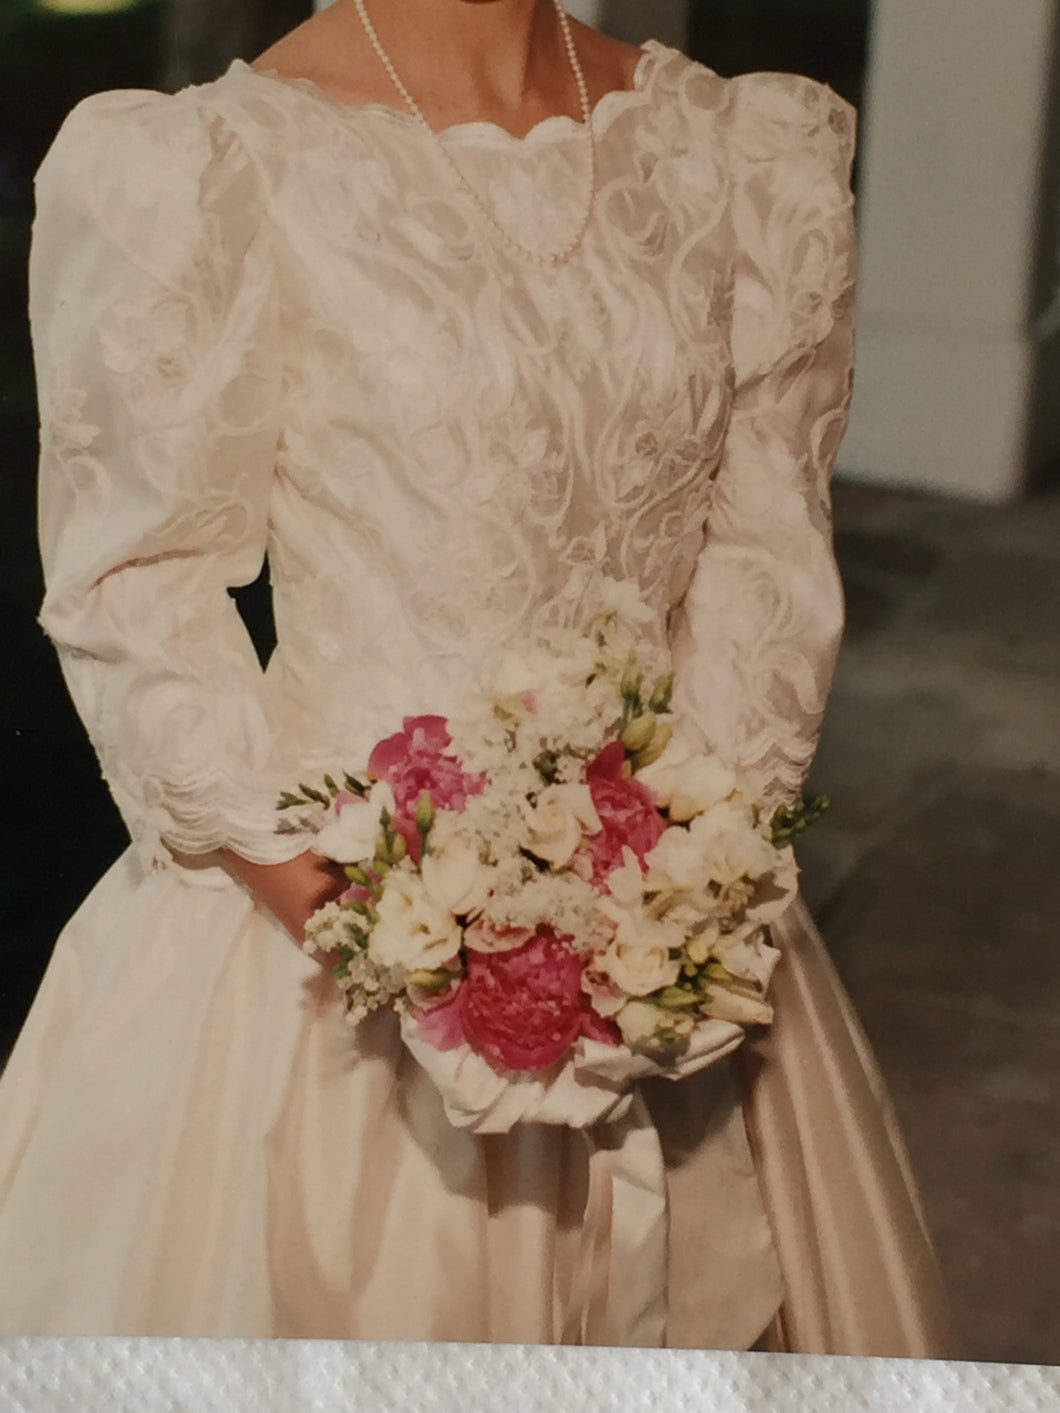 Carolina Herrera 'Silk Shantung' size 8 used wedding dress front view on bride